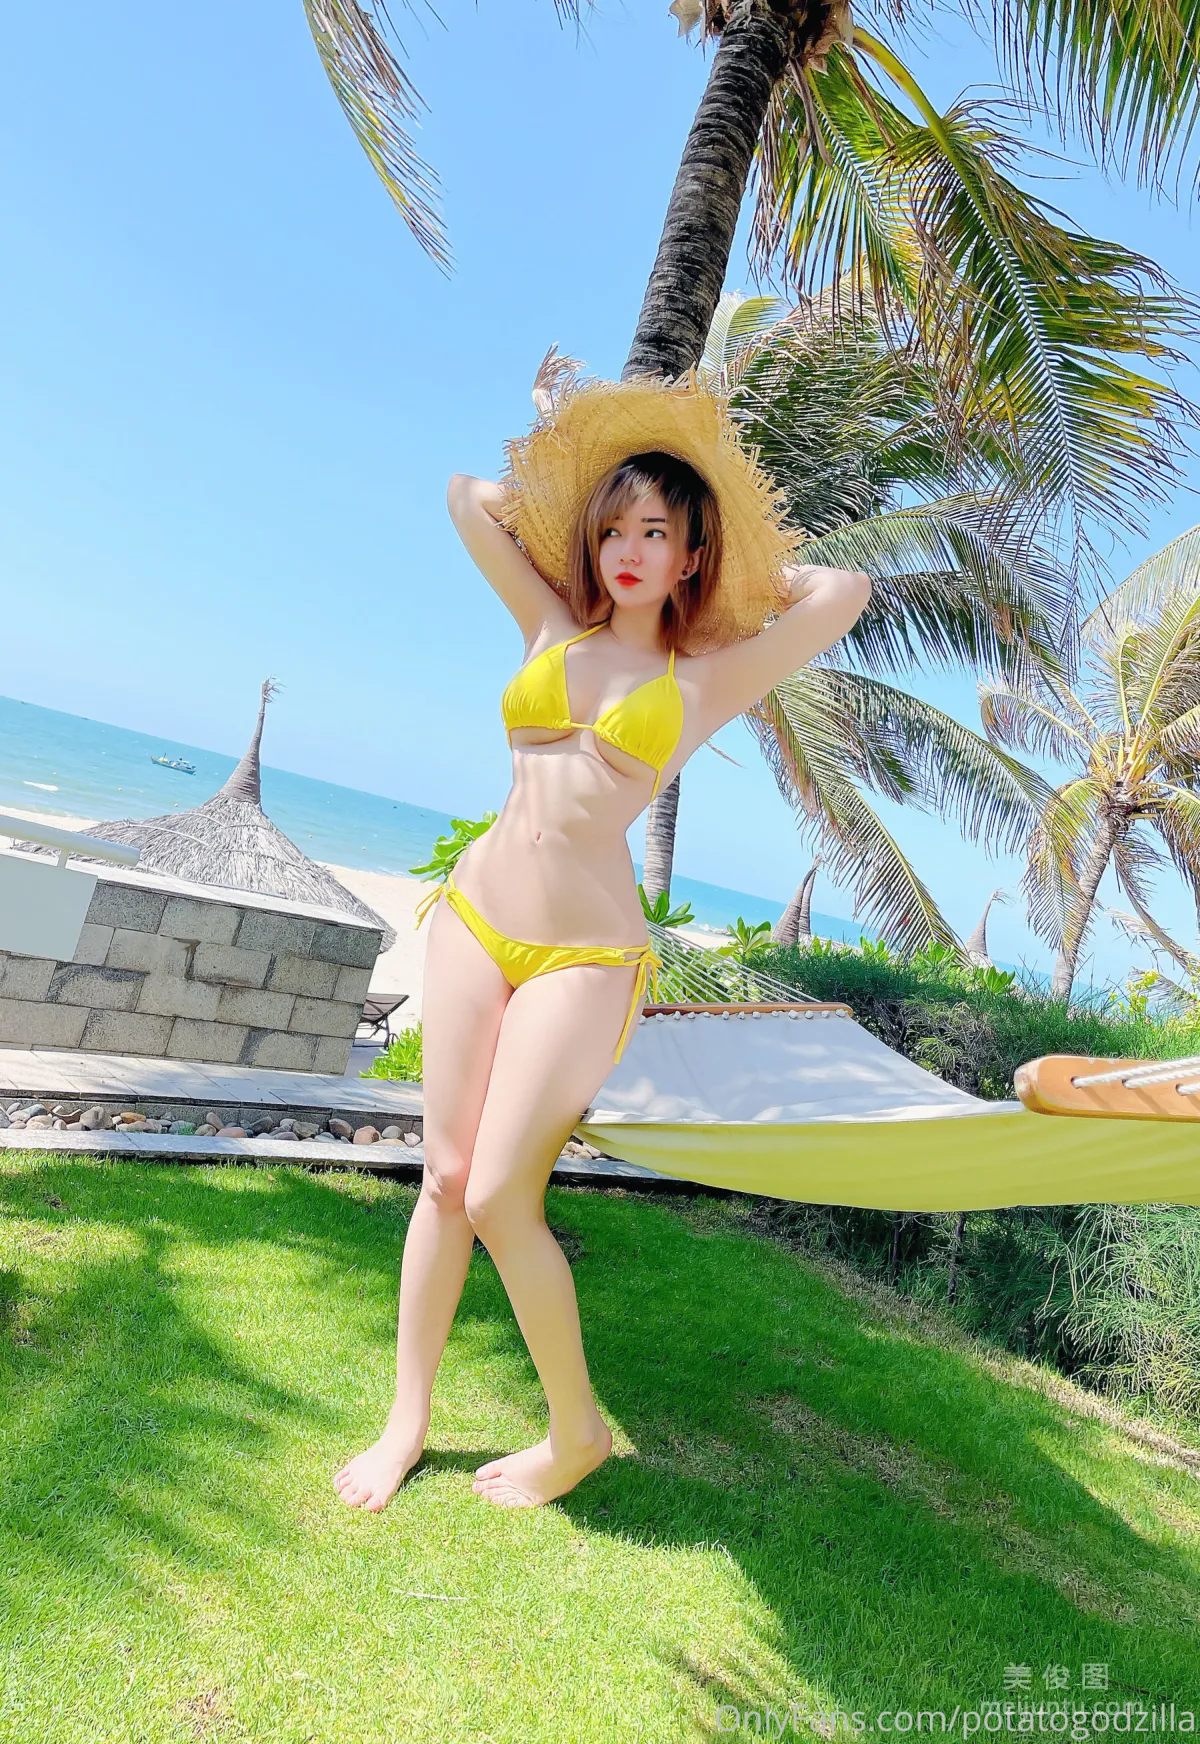 [网红COSER写真] Coser小姐姐Potato Godzilla - Yellow Bikini9